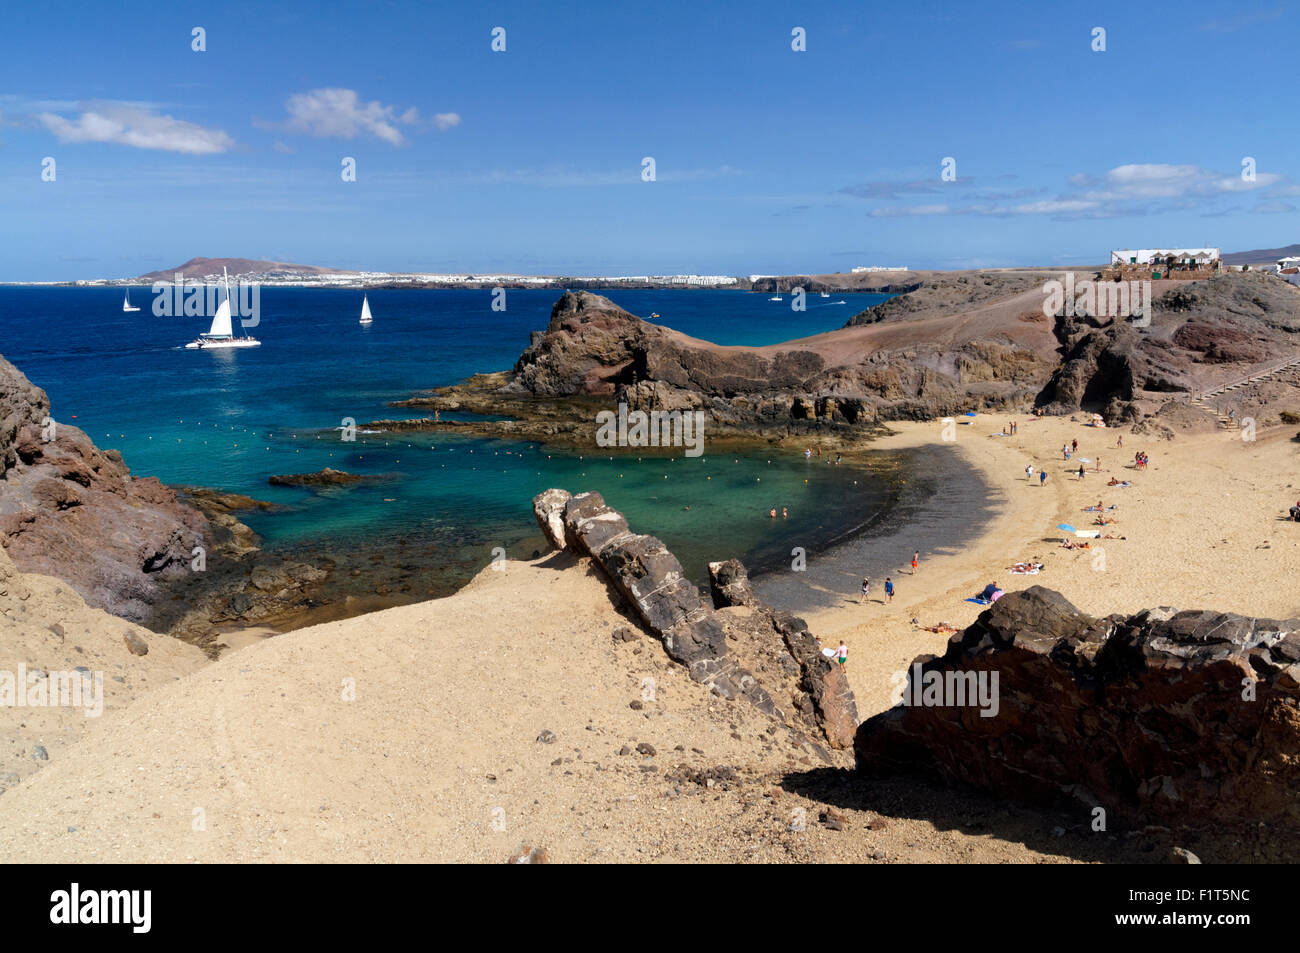 Papagayo Beach, Playa Blanca, Lanzarote, Canary Islands, Spain. Stock Photo